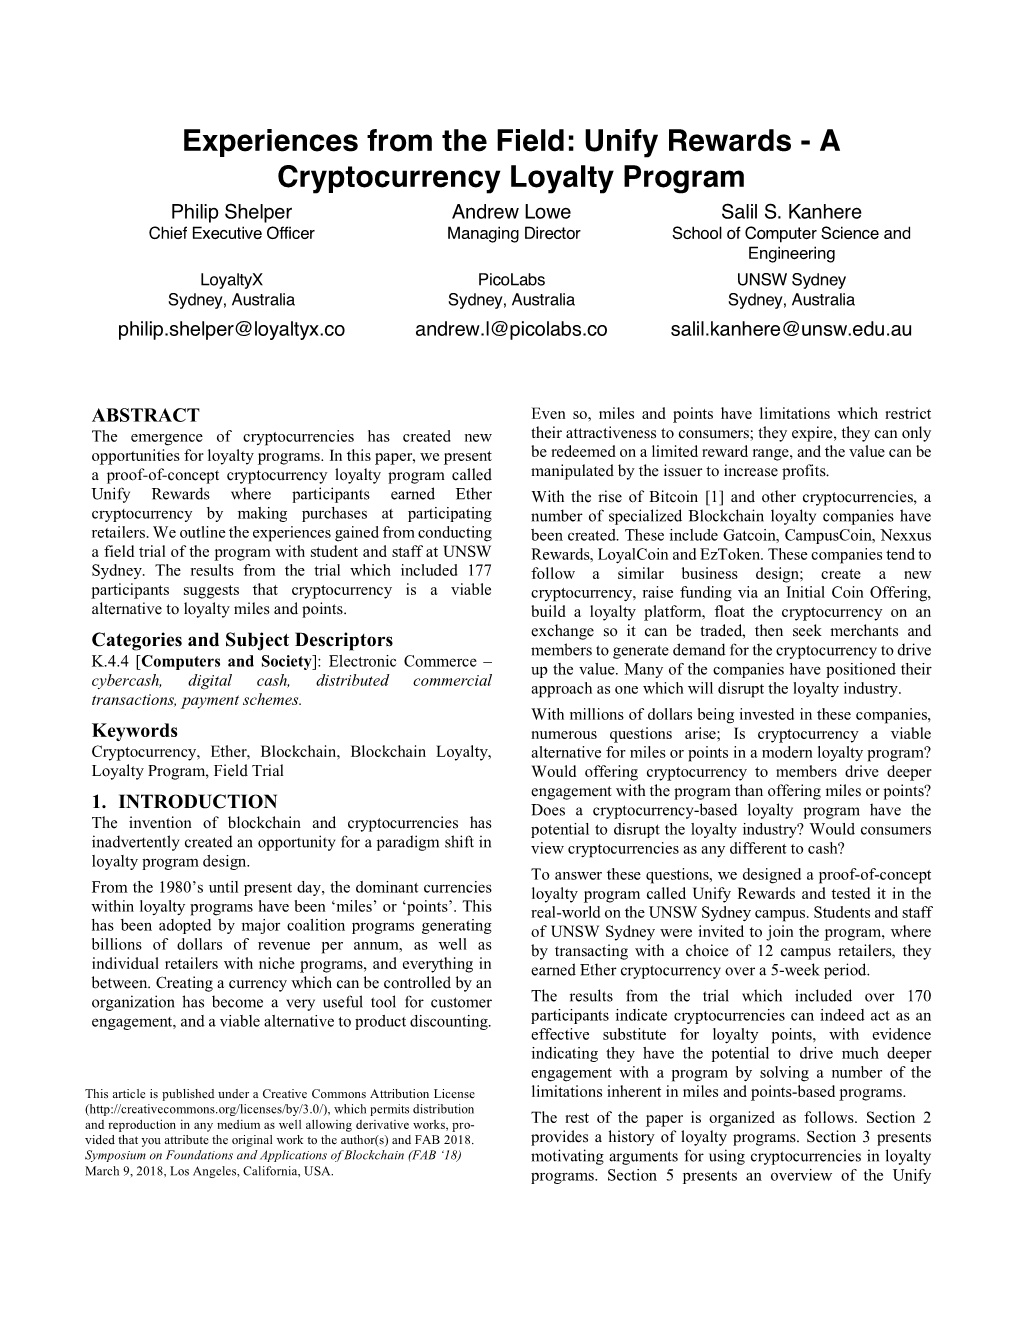 Unify Rewards - a Cryptocurrency Loyalty Program Philip Shelper Andrew Lowe Salil S